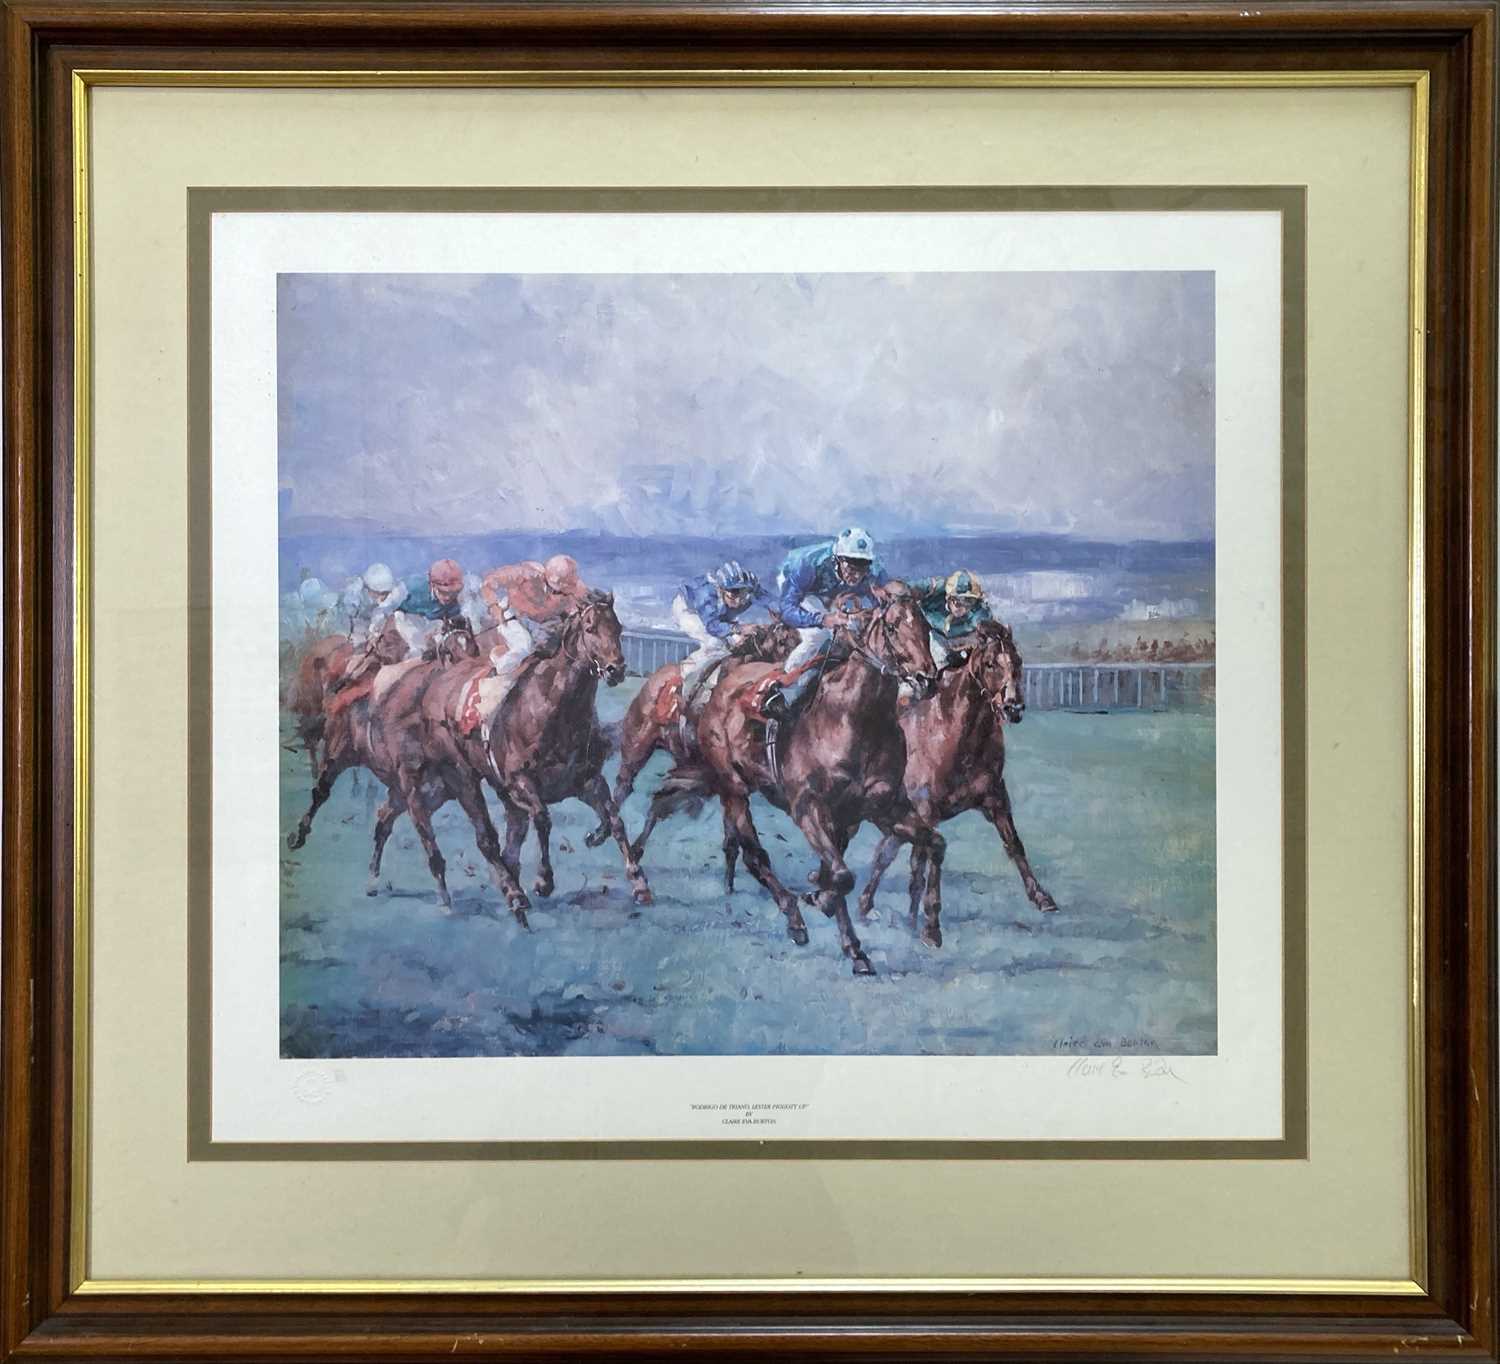 Lot 14 - HORSE RACHING - CLAIRE EVA BURTON - SIGNED ARTWORK.